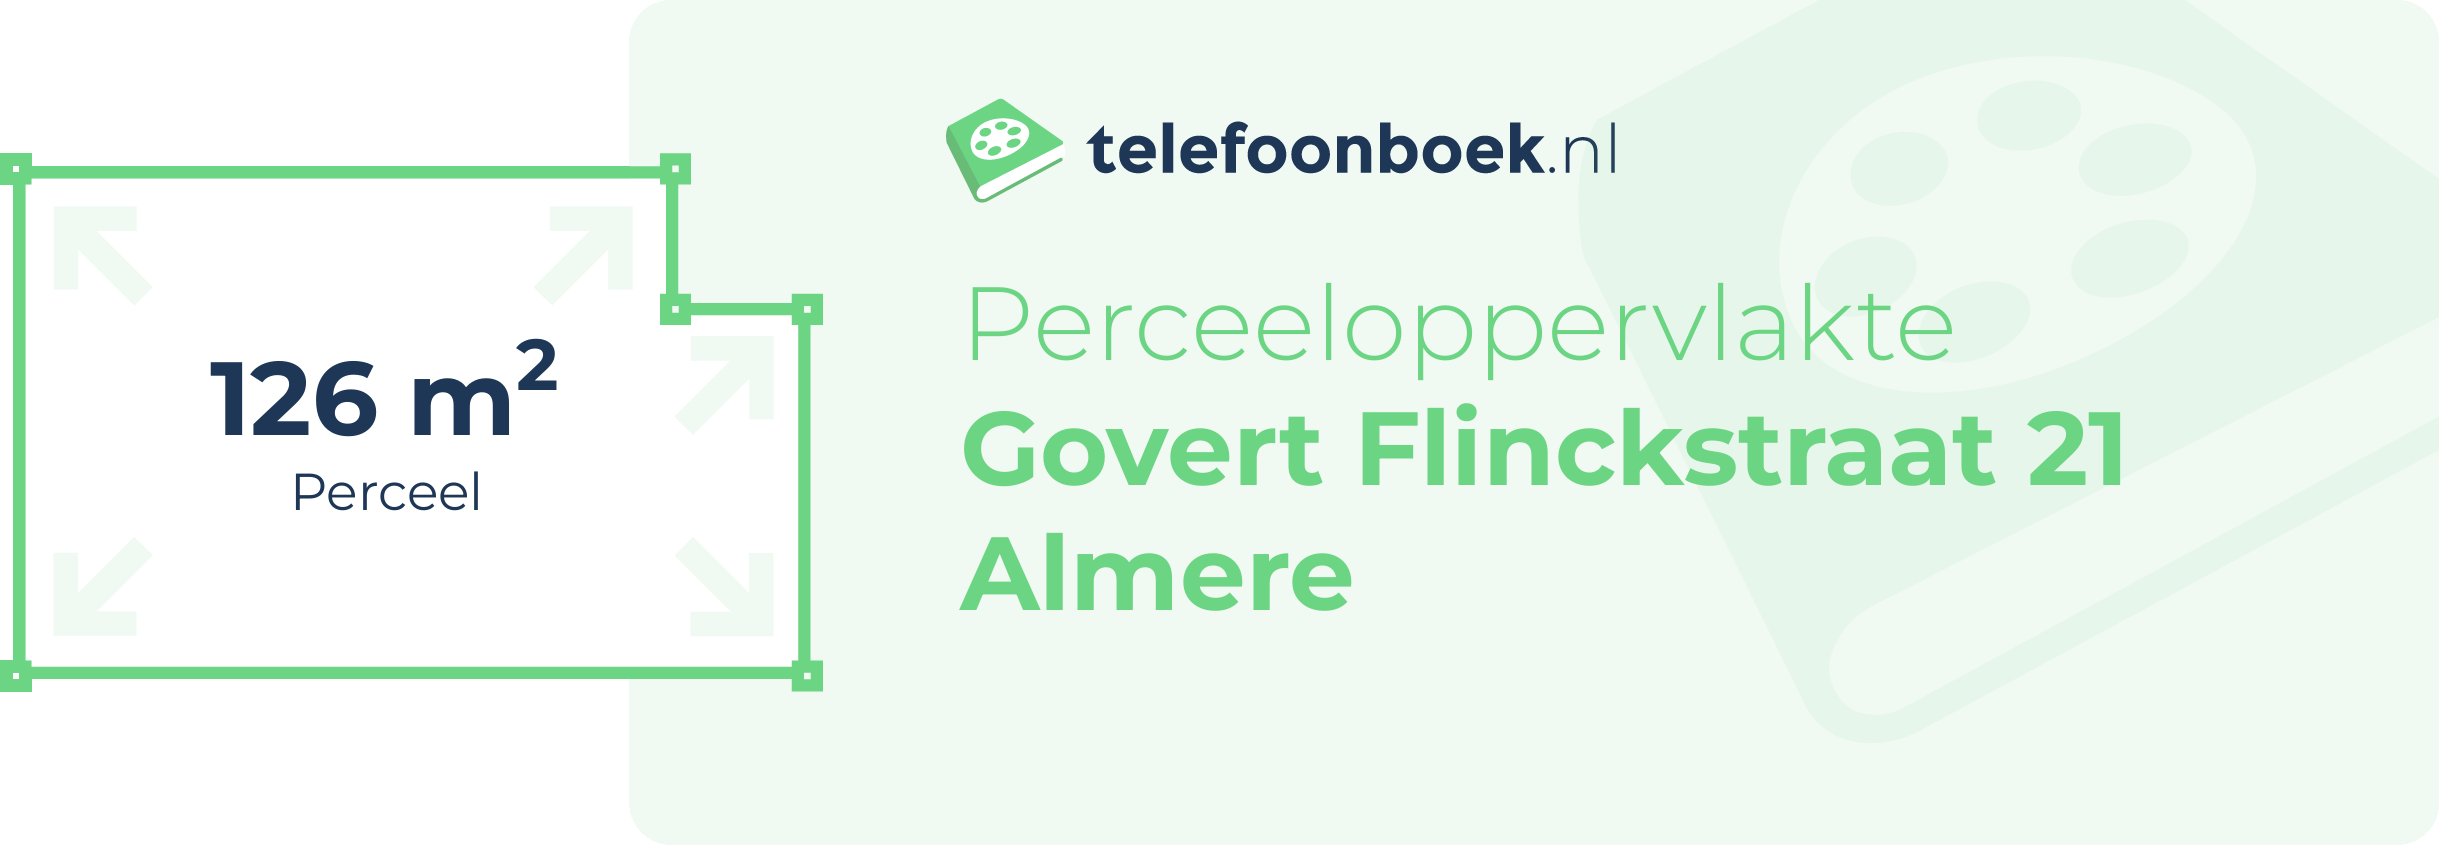 Perceeloppervlakte Govert Flinckstraat 21 Almere